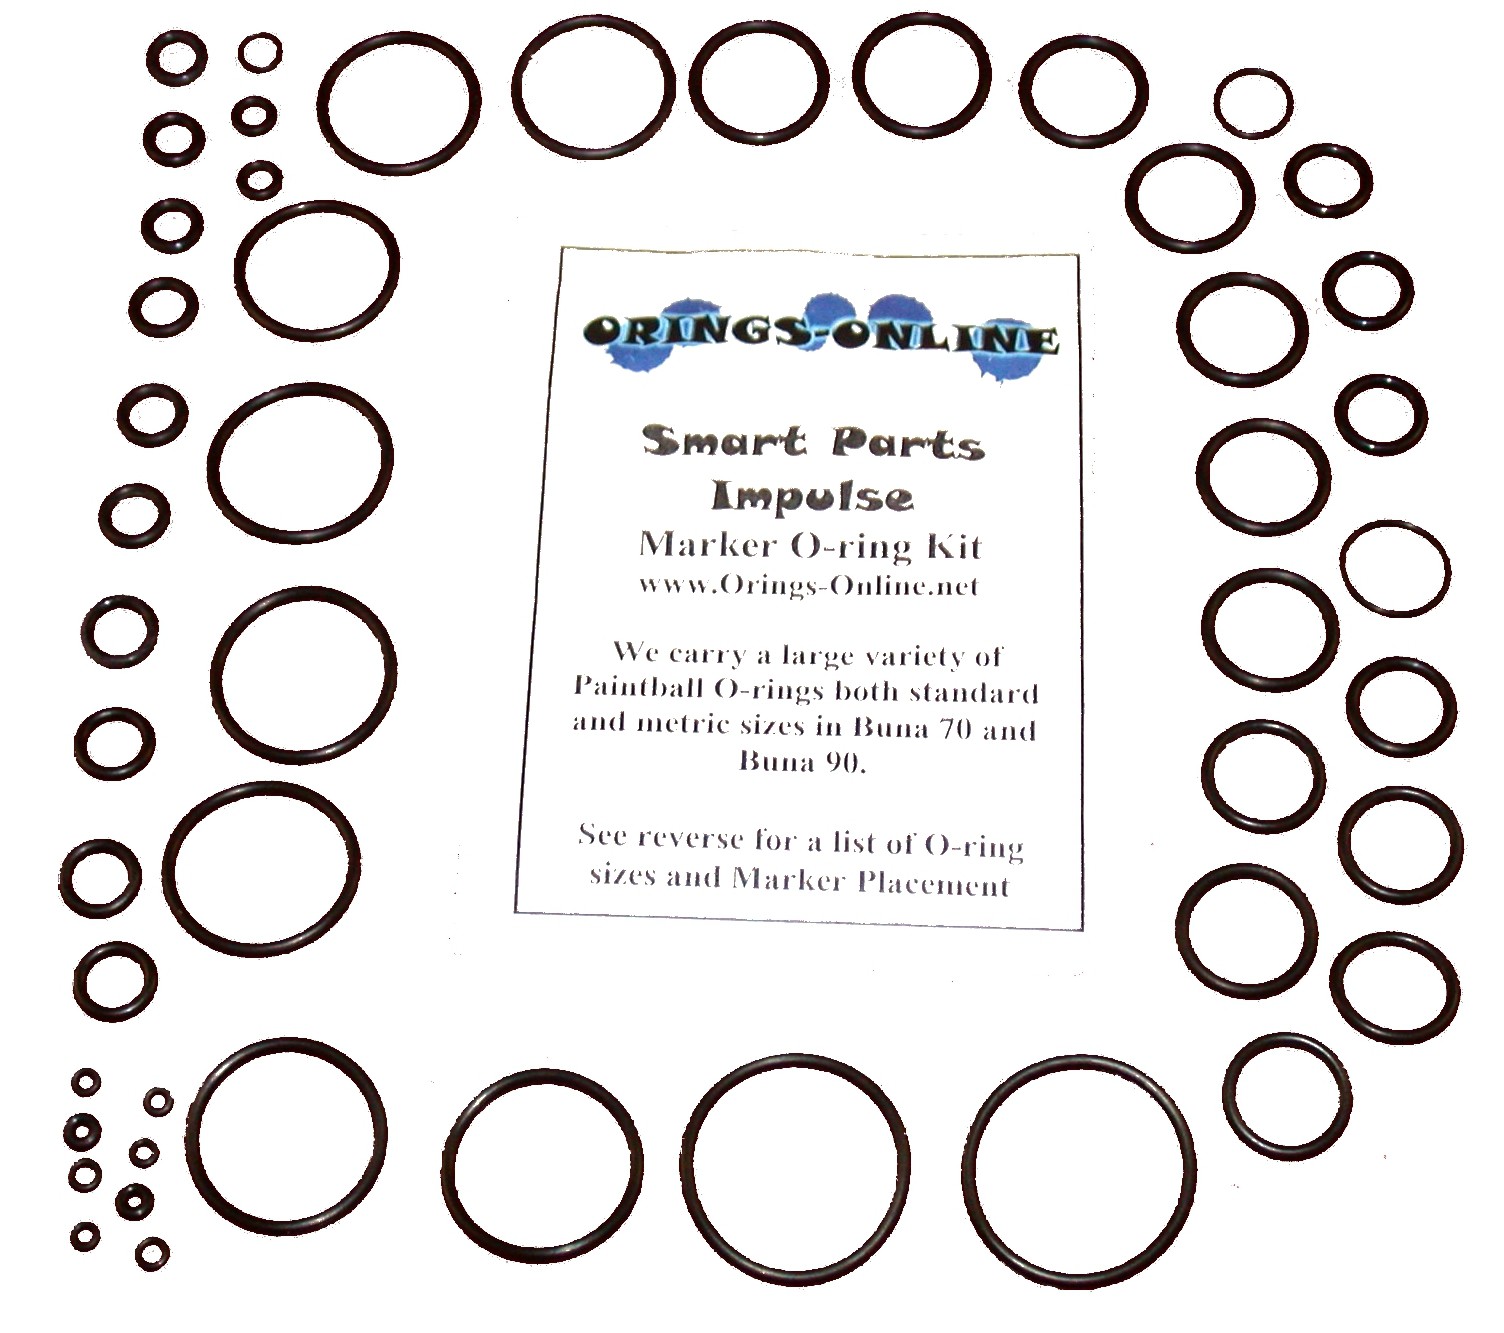 Smart Parts - Impulse Marker O-ring Kit